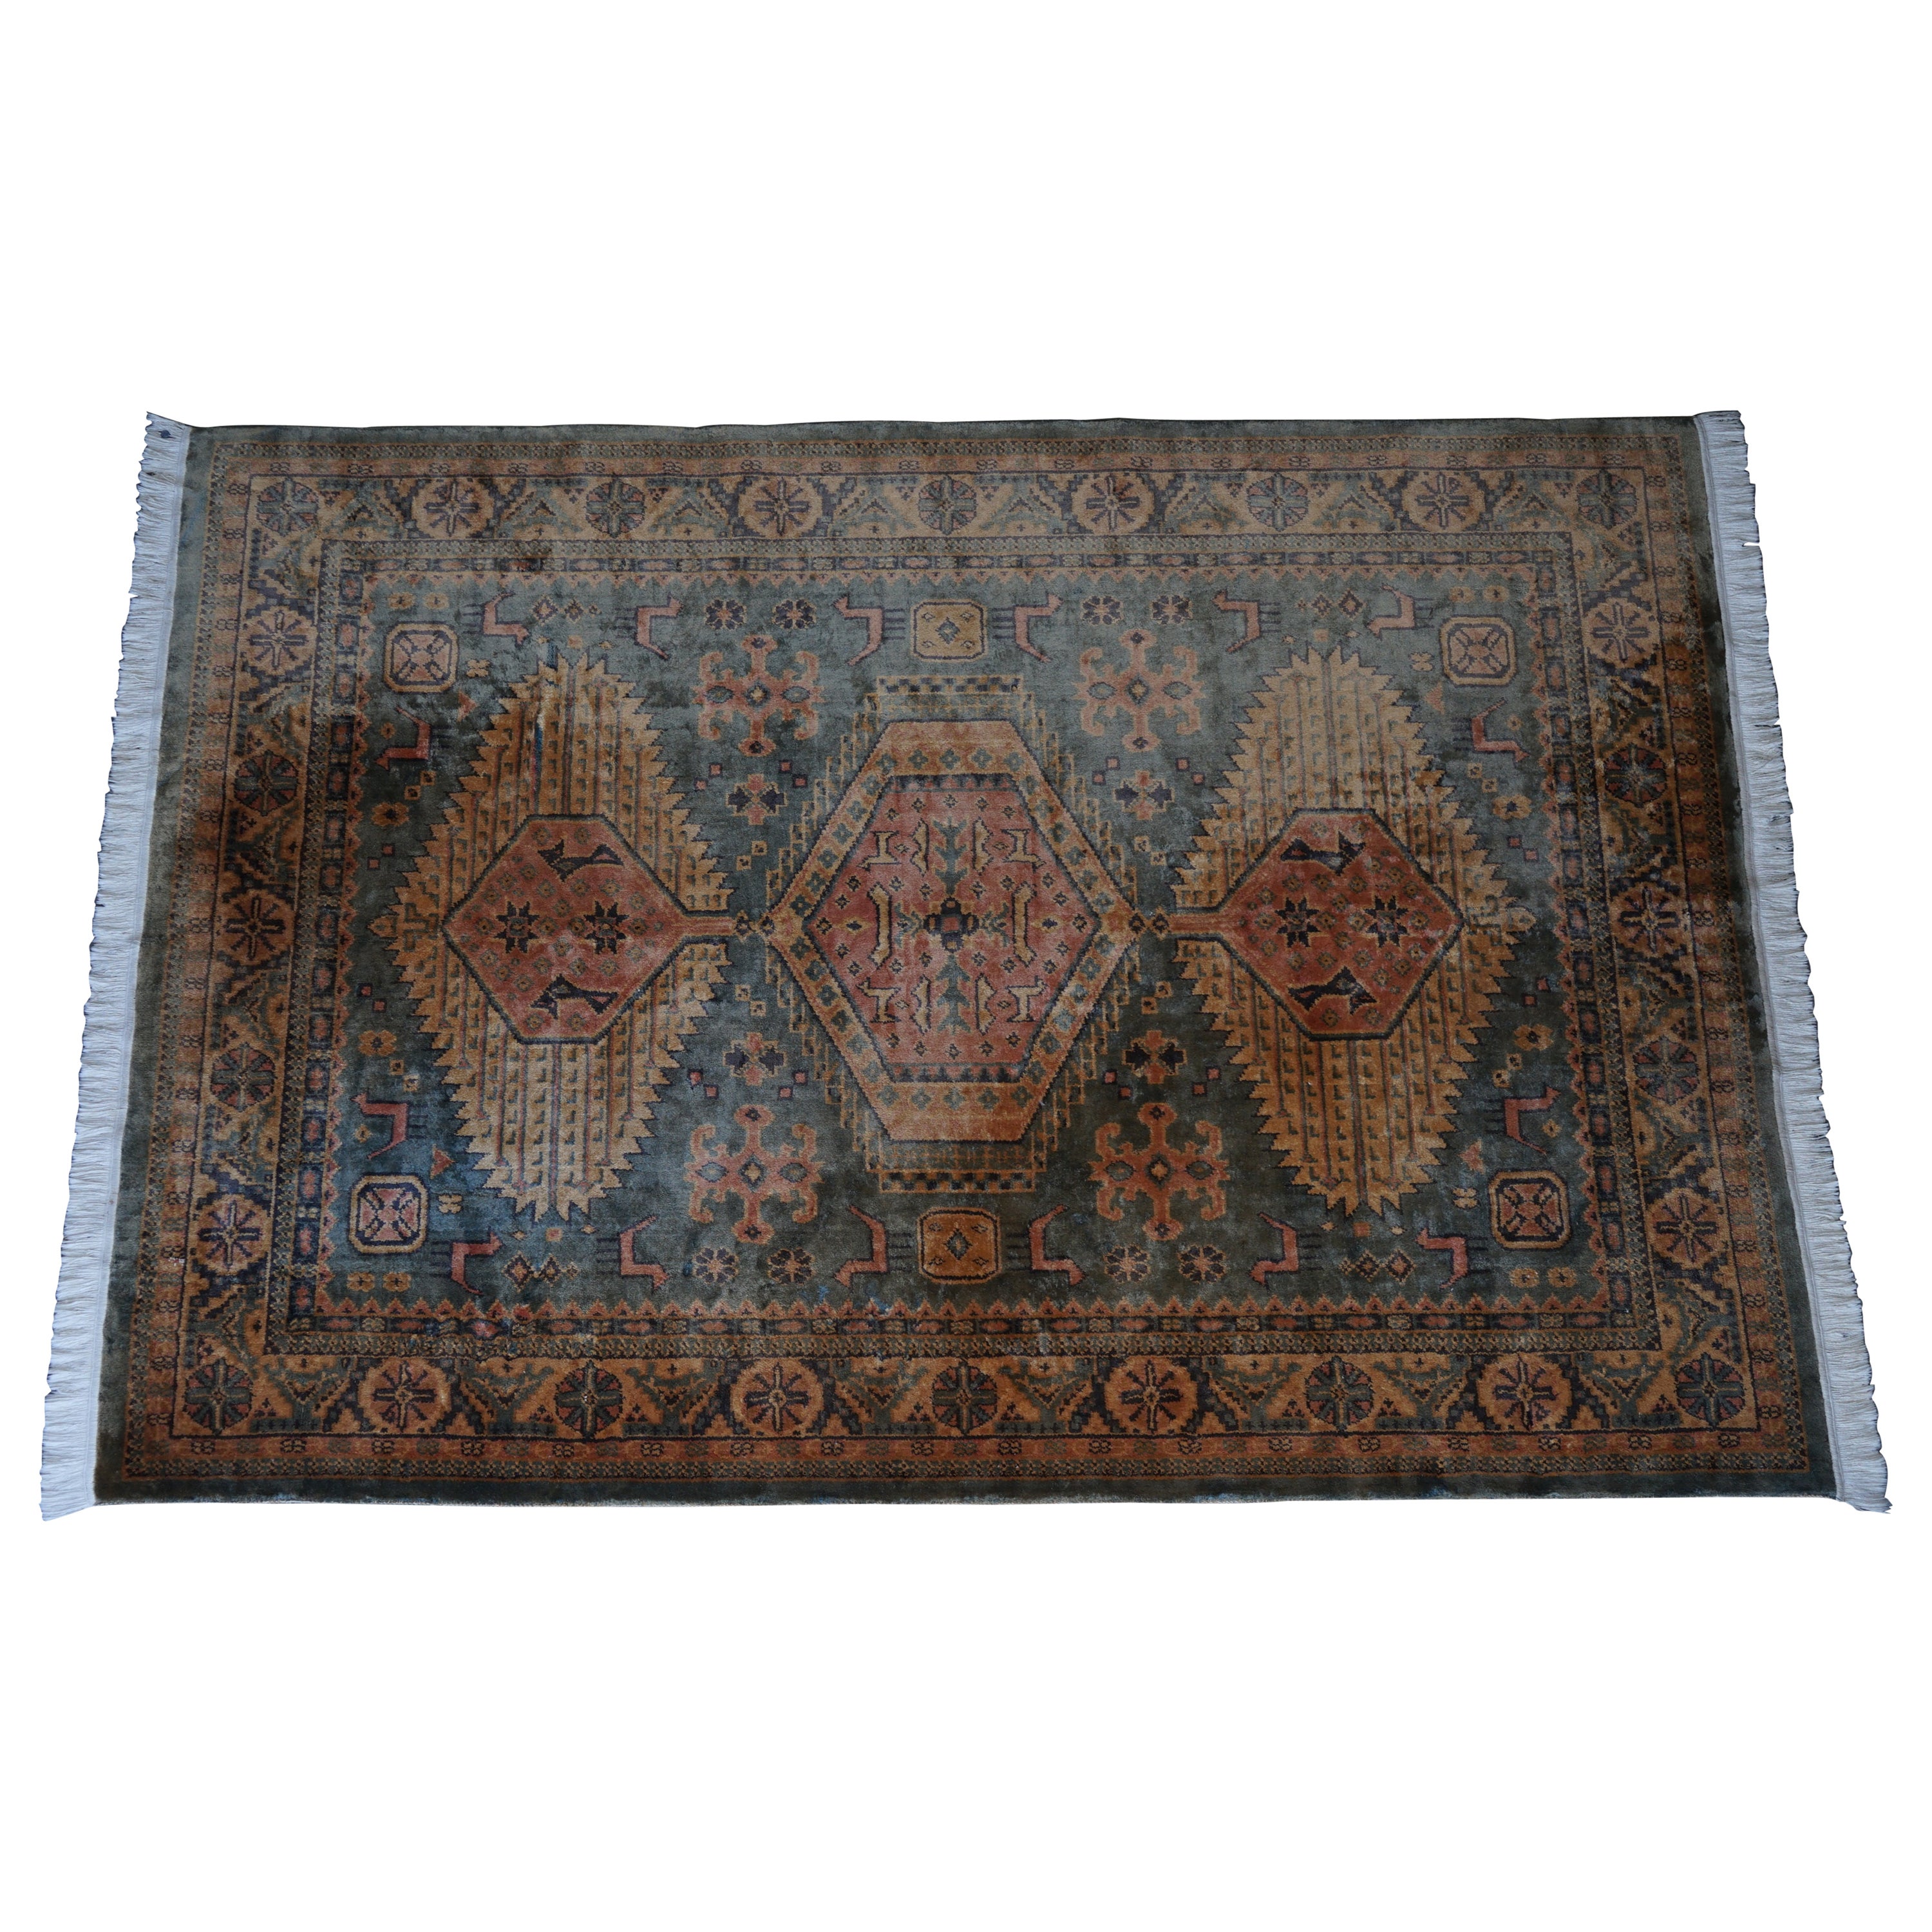 Large French Antique Aztek Kilim Style Rug / Carpet Very Nicely Aged